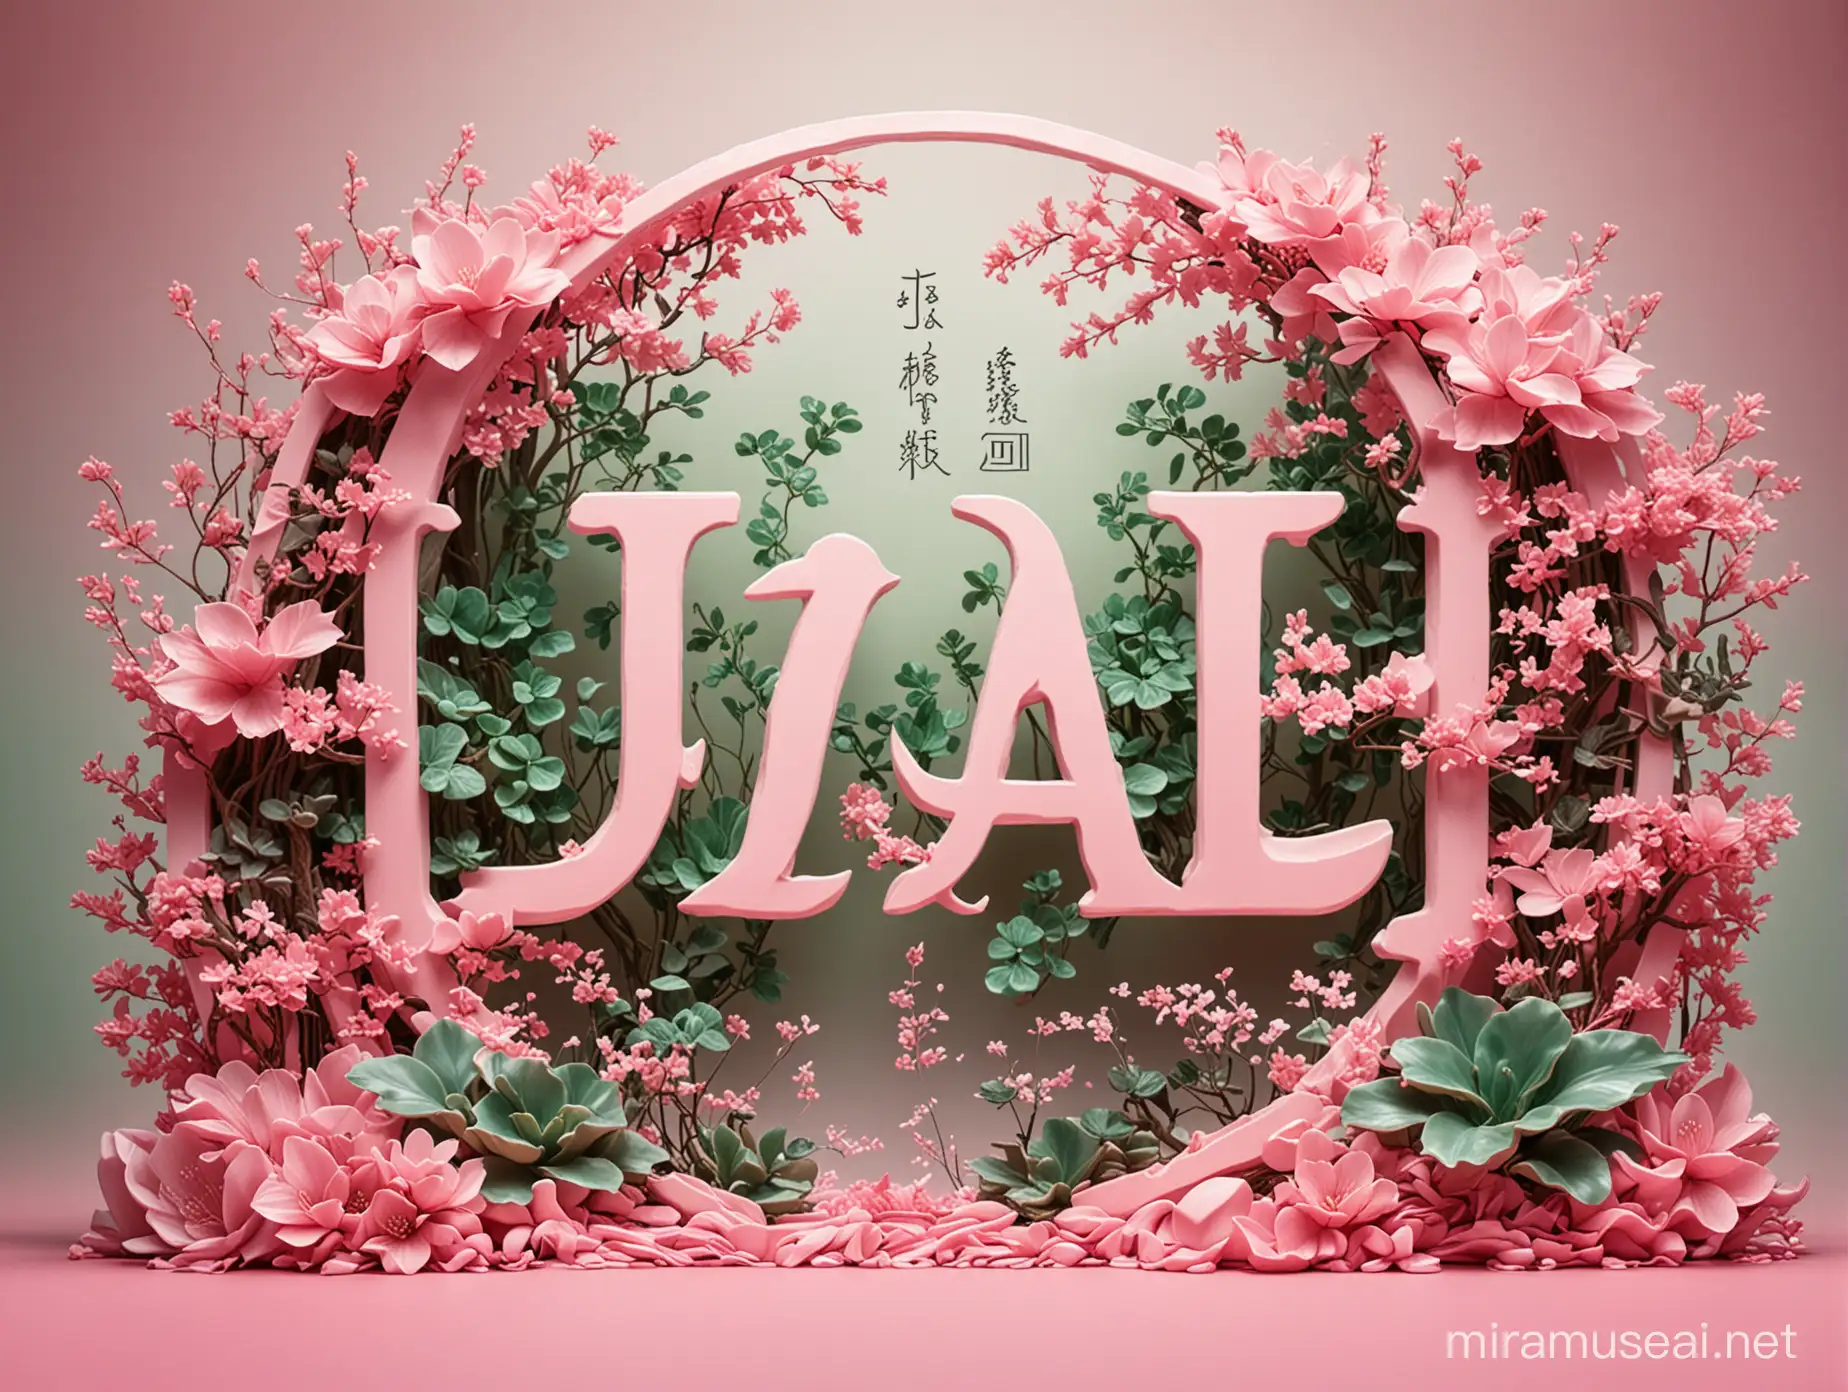 Stunning Jade Garden with Pink JADE Lettering